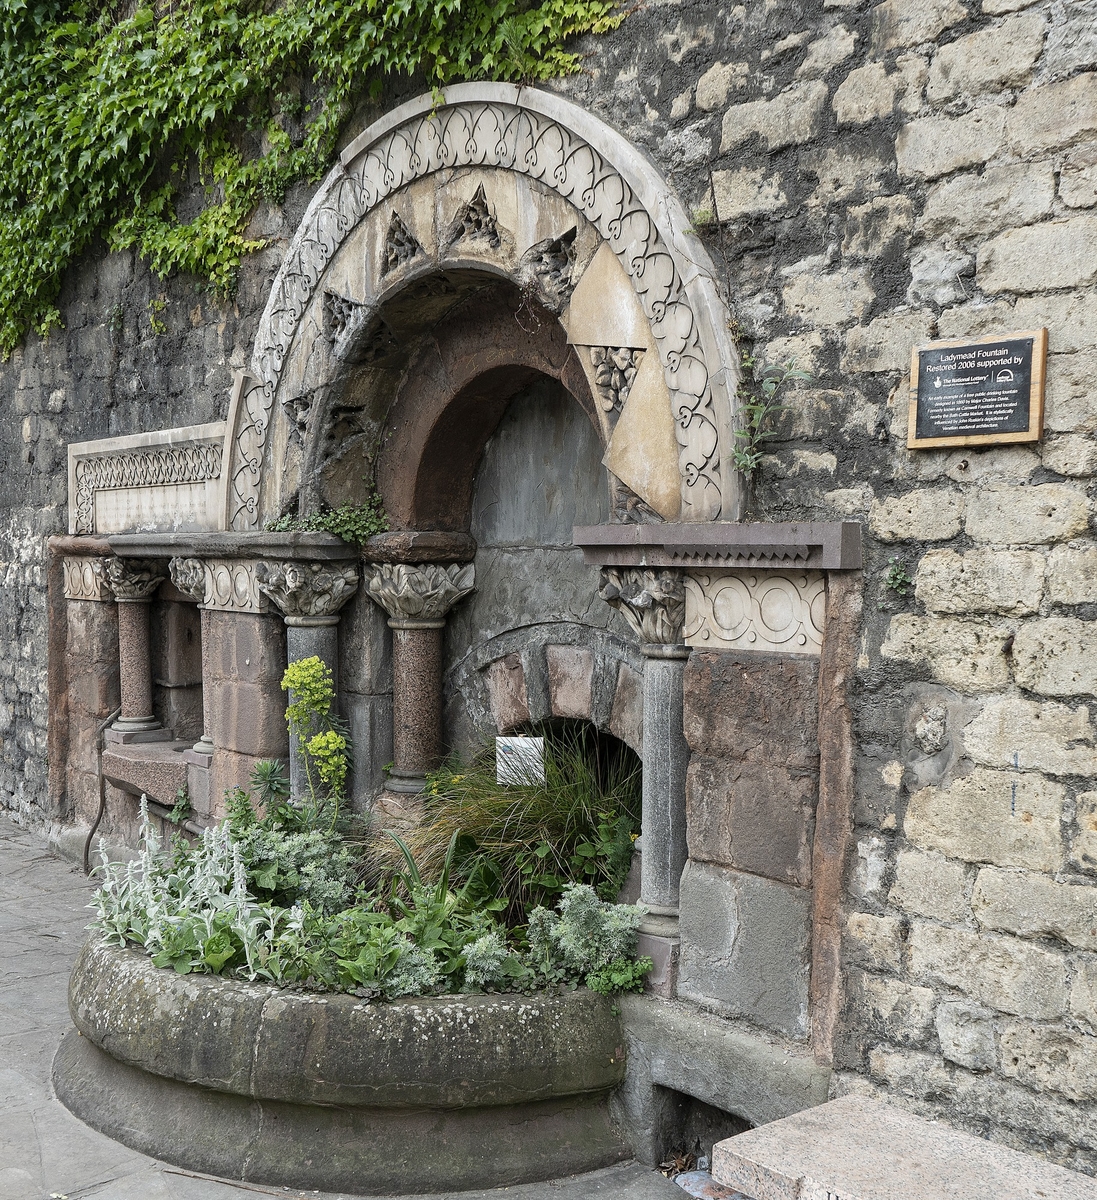 Ladymead Fountain (Carnwell Fountain)